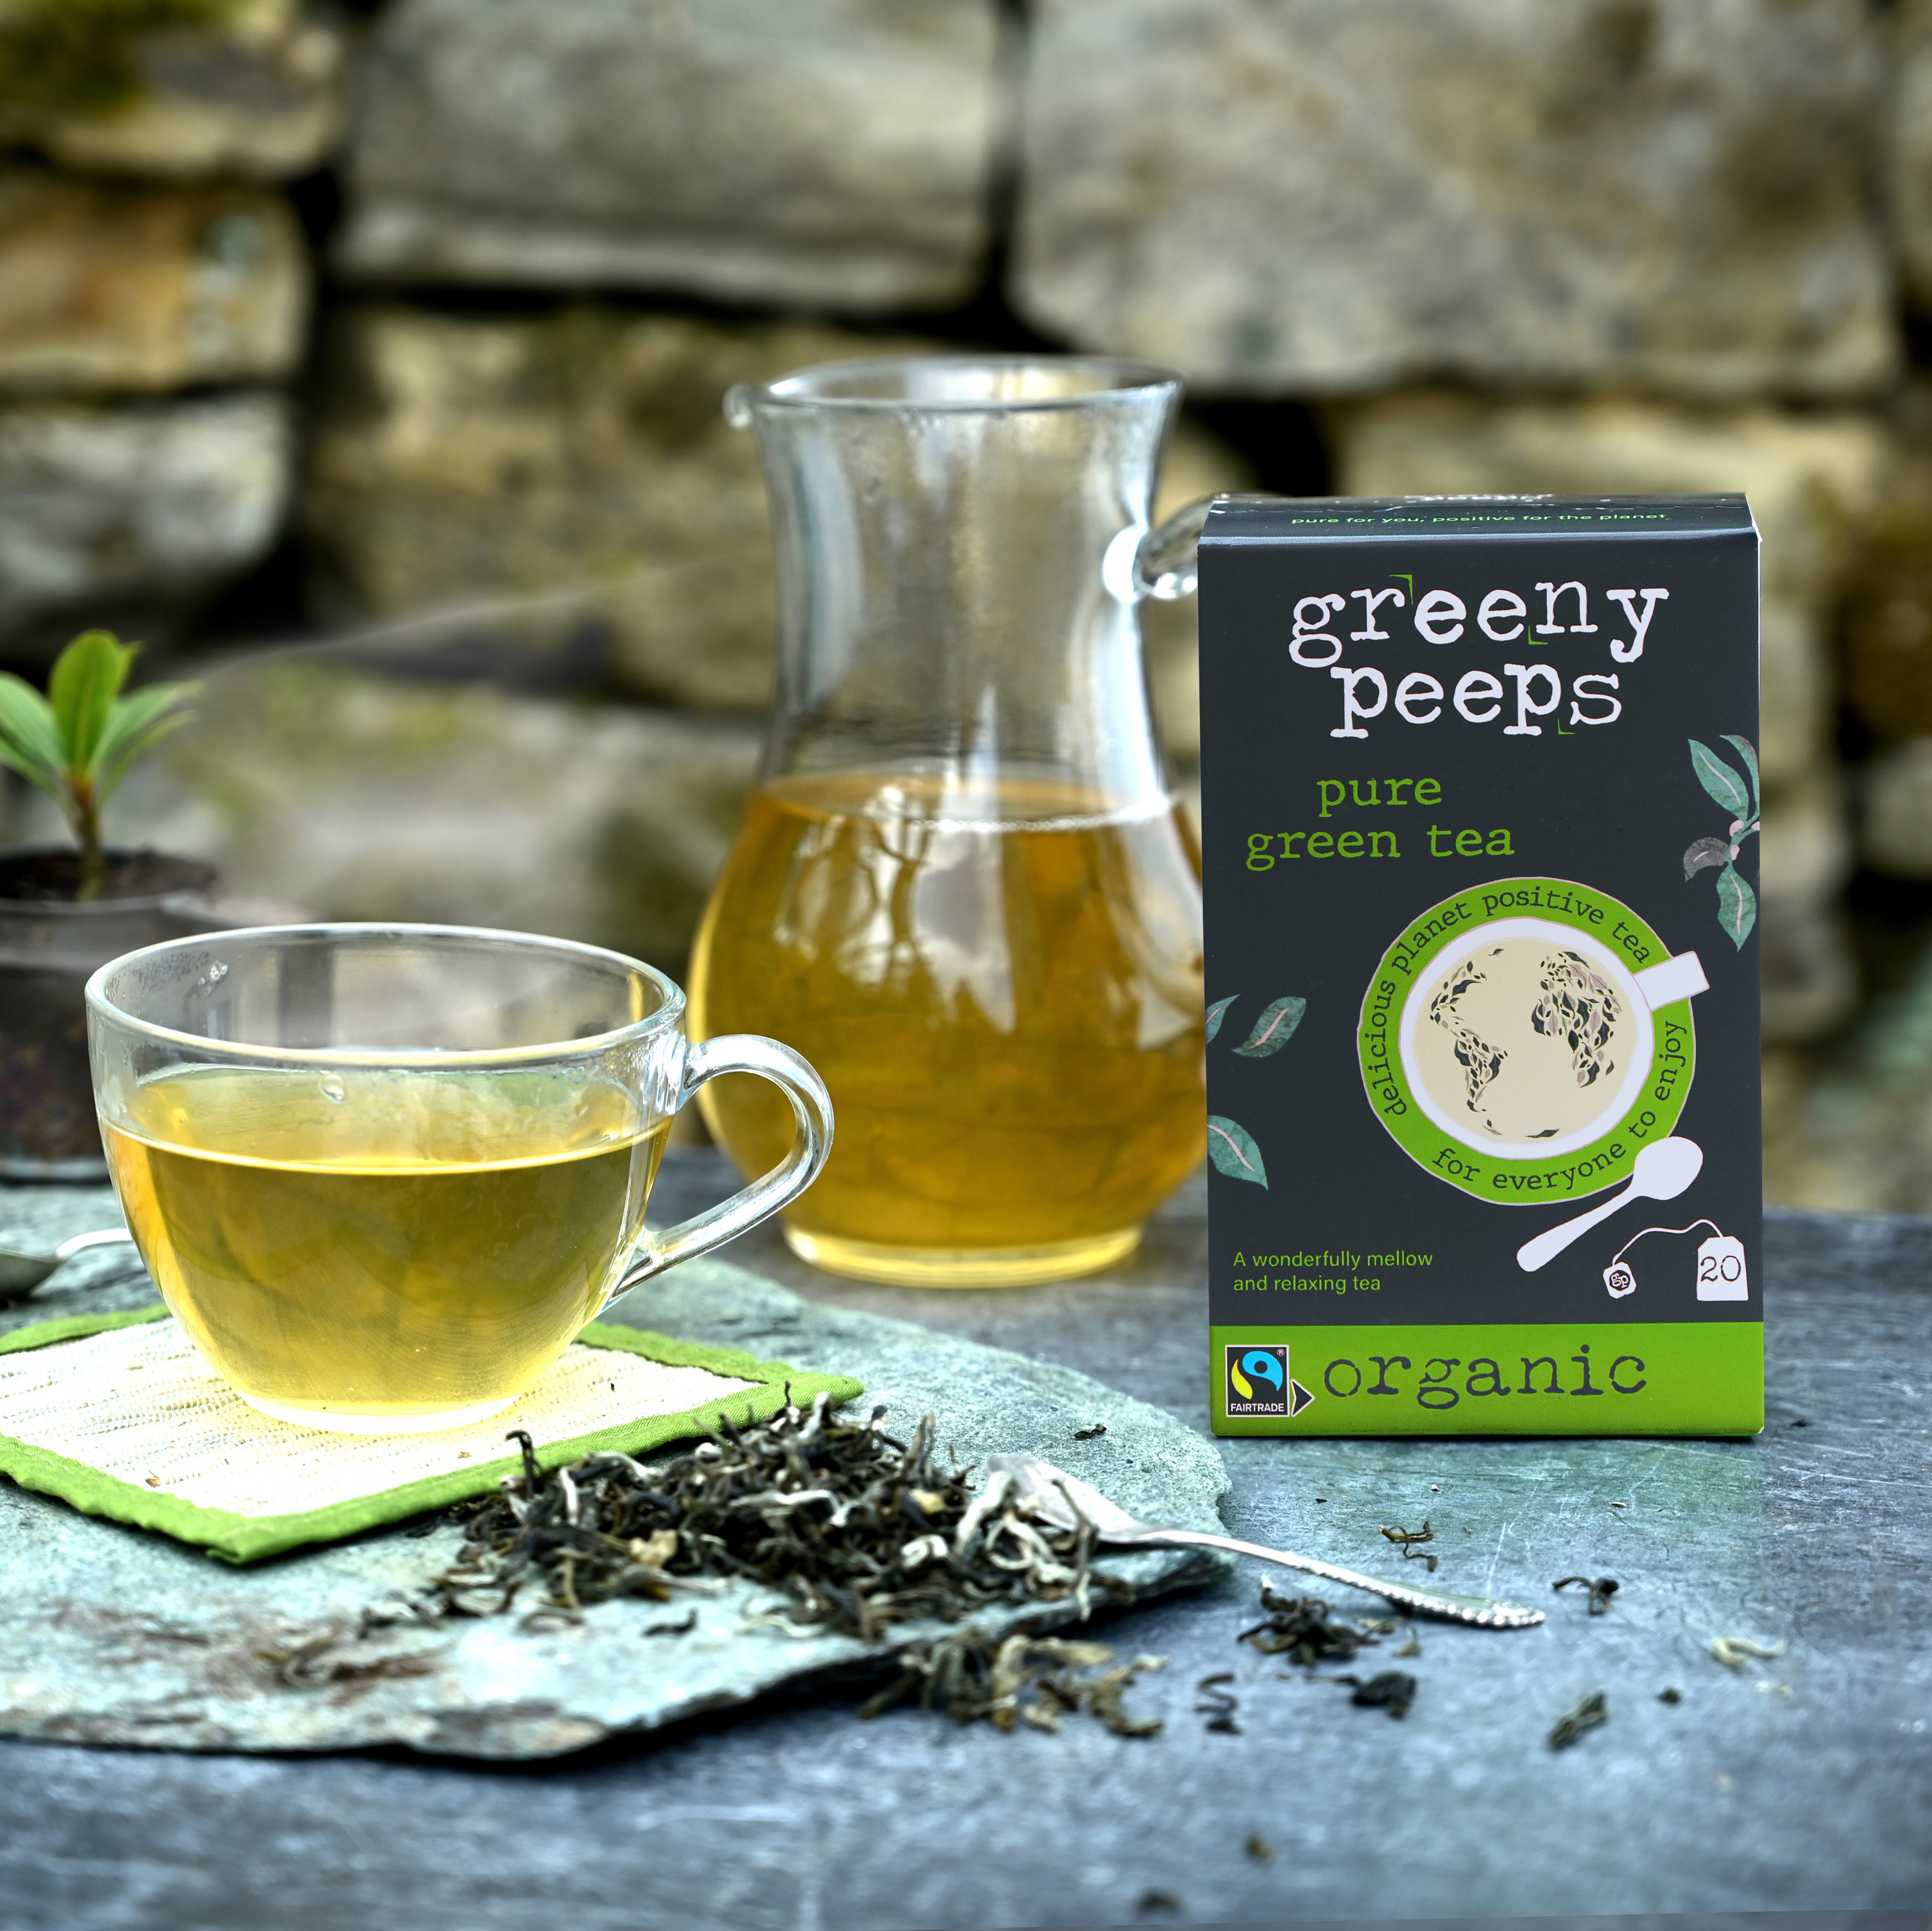 Greenypeeps Darjeeling tea